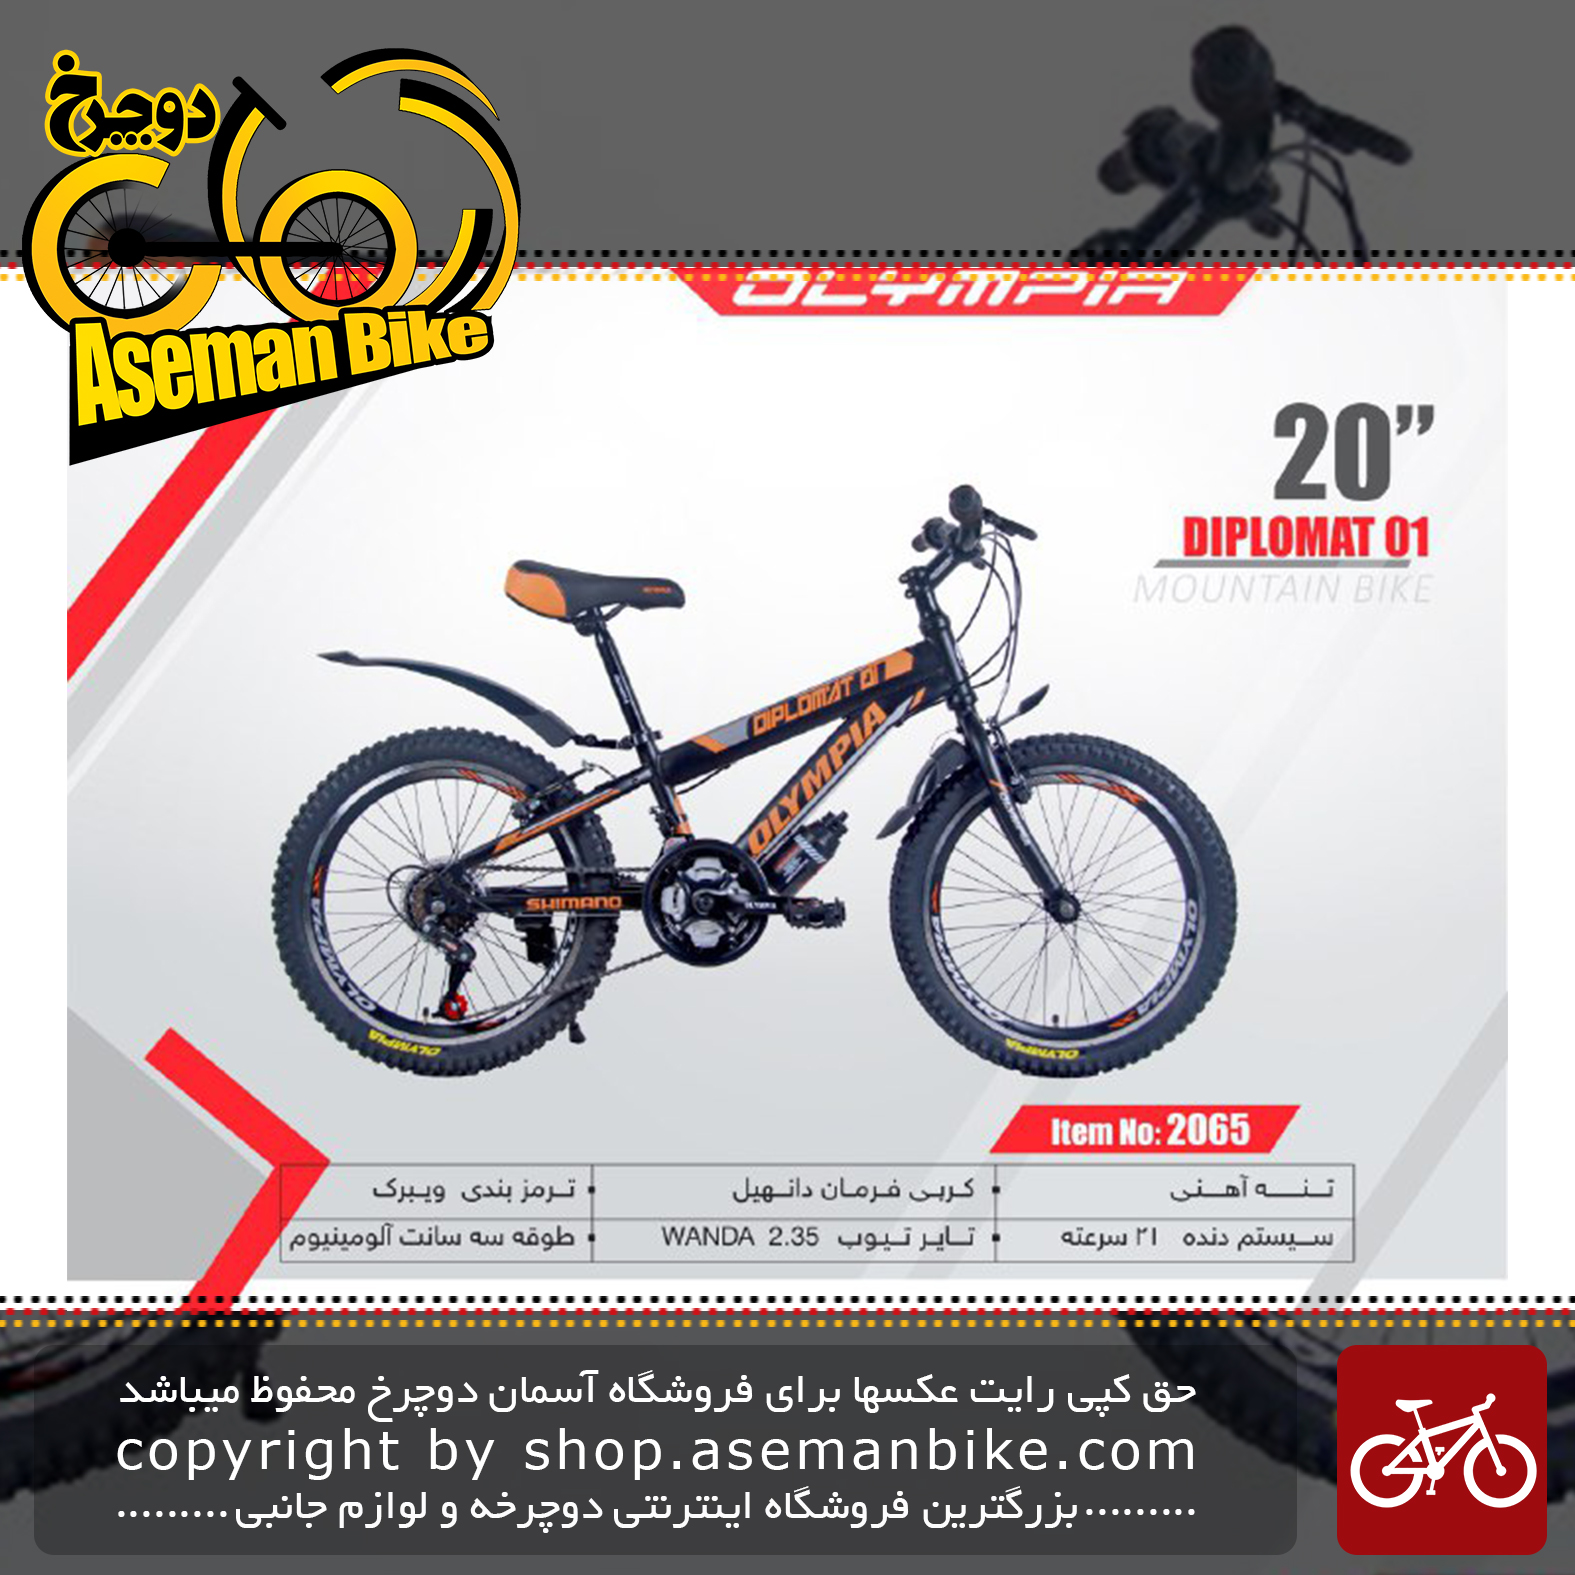 دوچرخه کوهستان المپیا سایز 20 مدل دیپلومات 01 01 OLYMPIA SIZE 20 DIPLOMAT